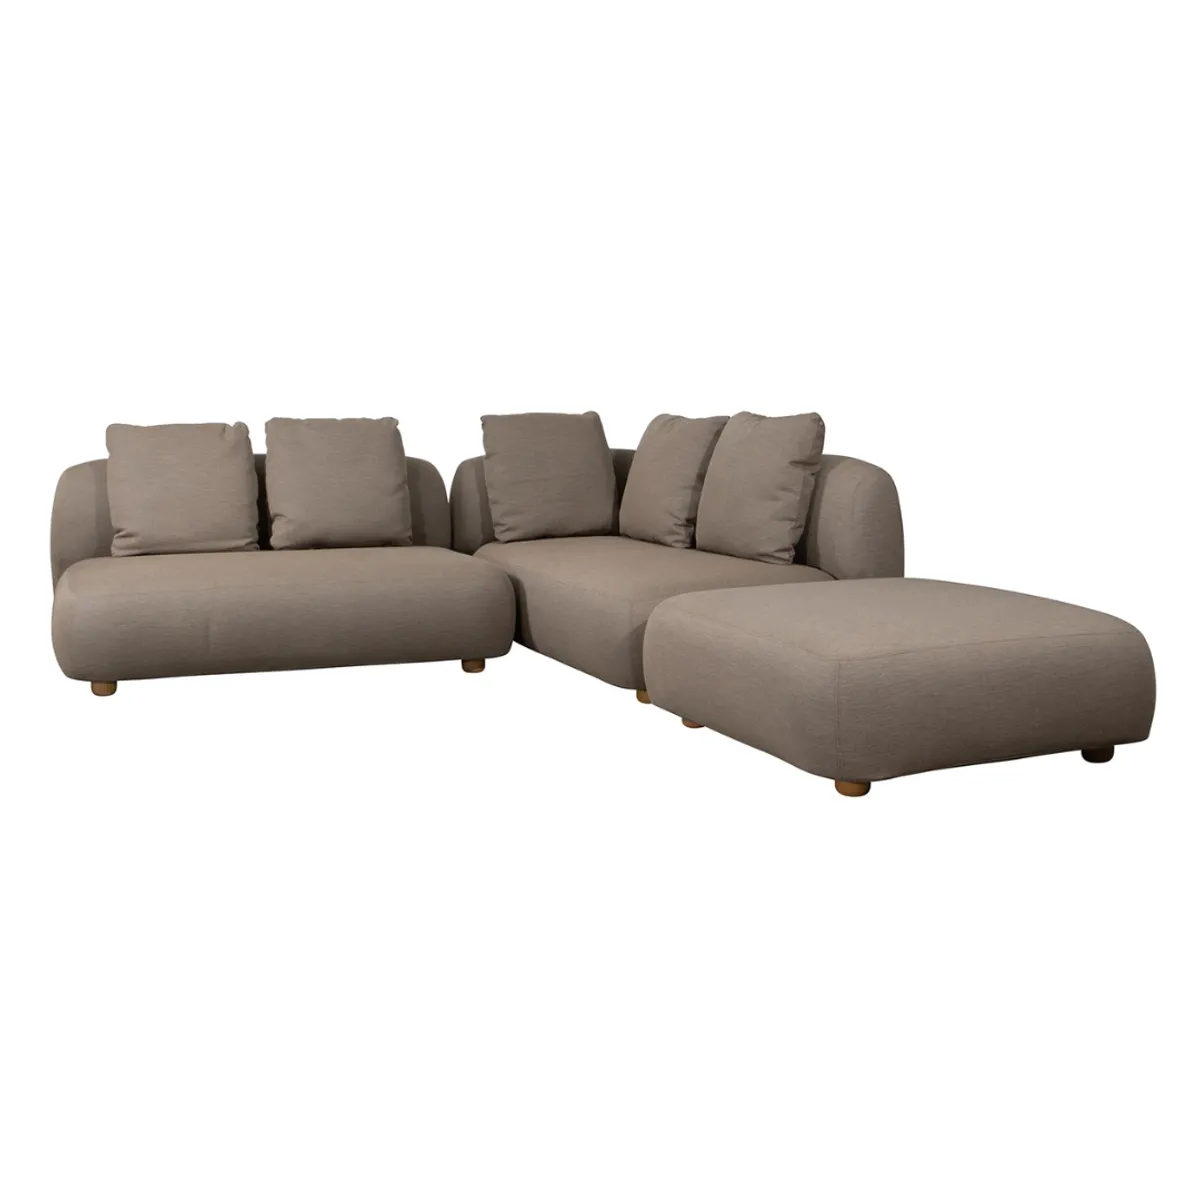 Serenity corner sofa 1